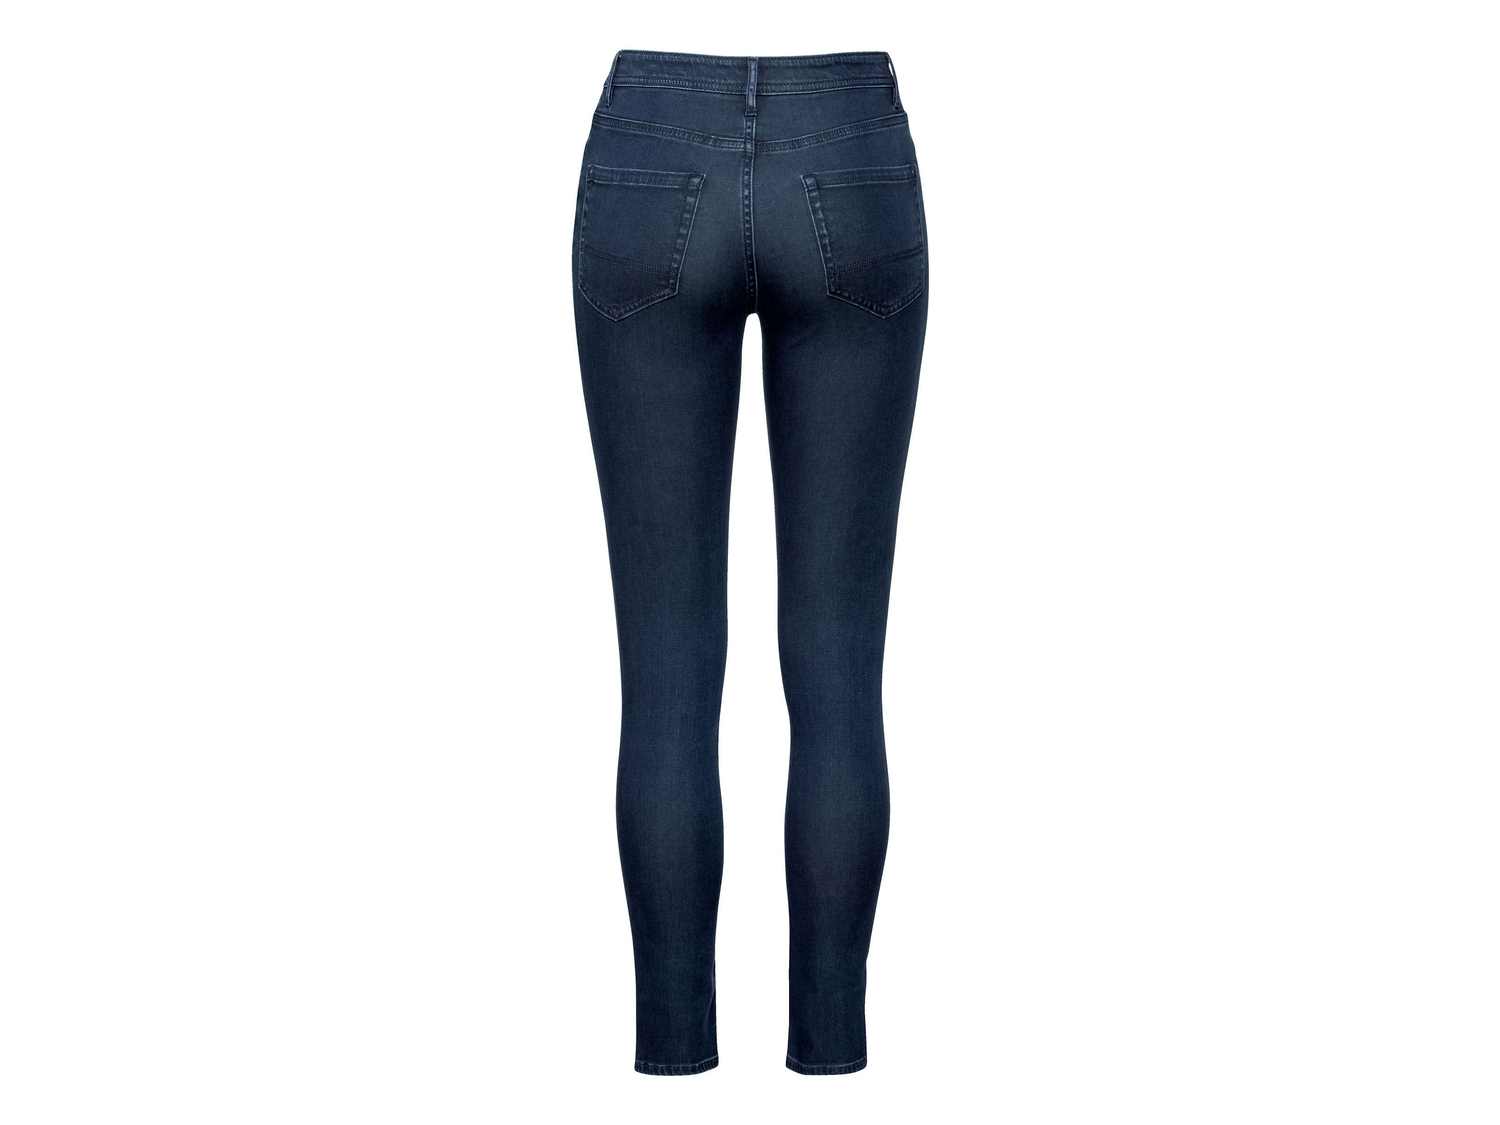 Jeans Super Skinny Fit da donna Esmara, prezzo 11.99 &#8364; 
Misure: 38-46
Taglie ...